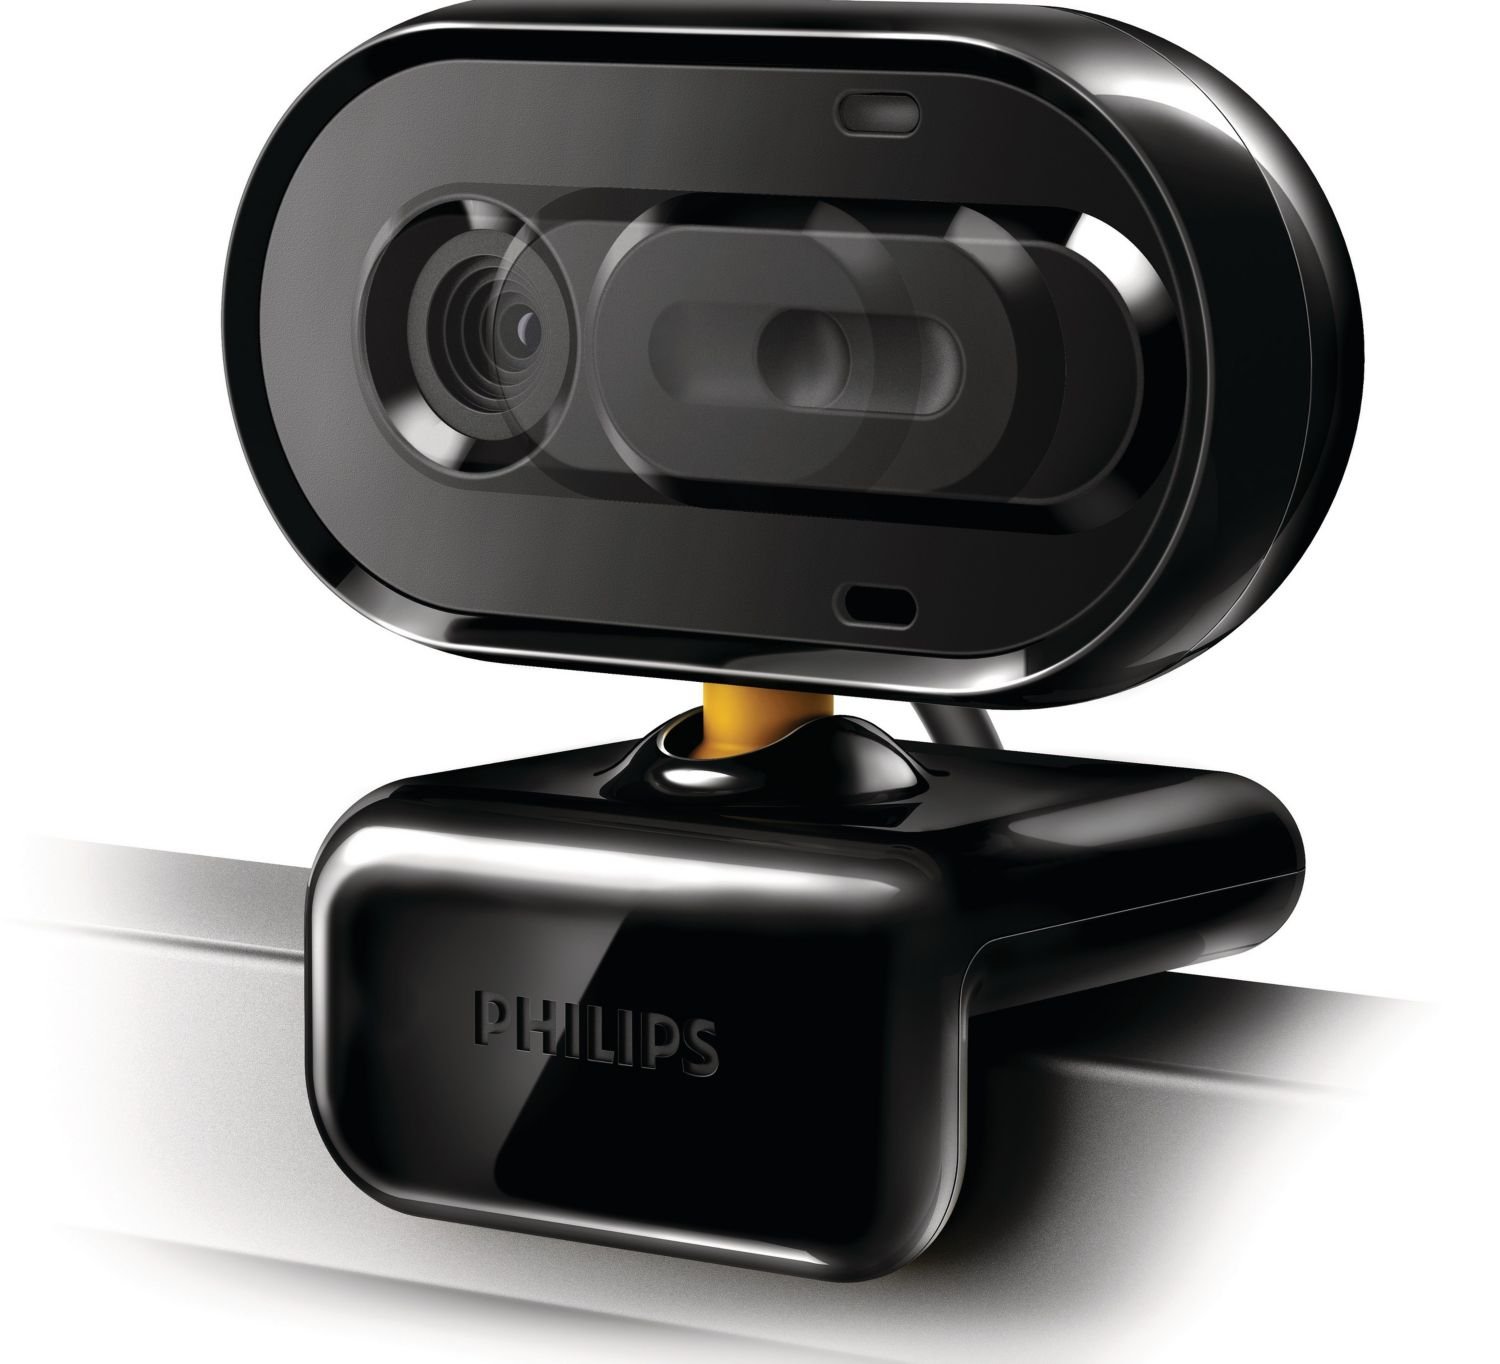 Philips Webcam Drivers Windows 10 Dwnloadtron